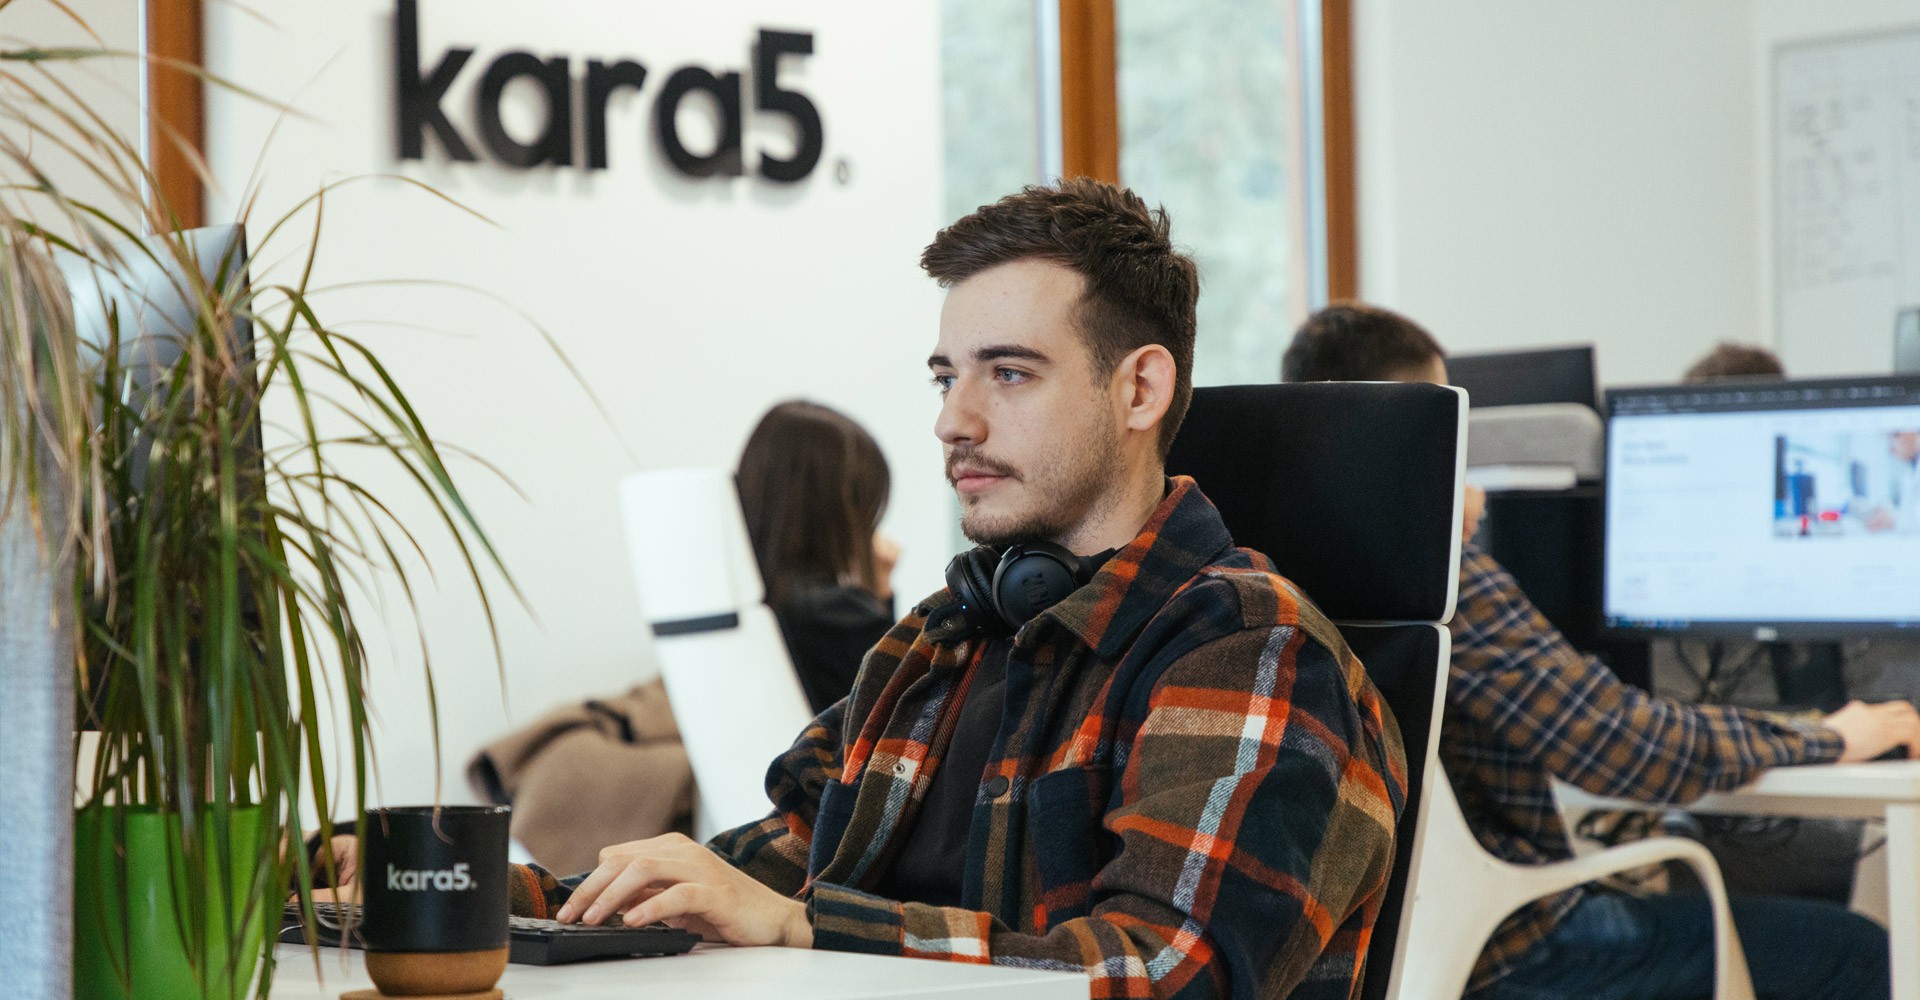 Kara5 - Web Design